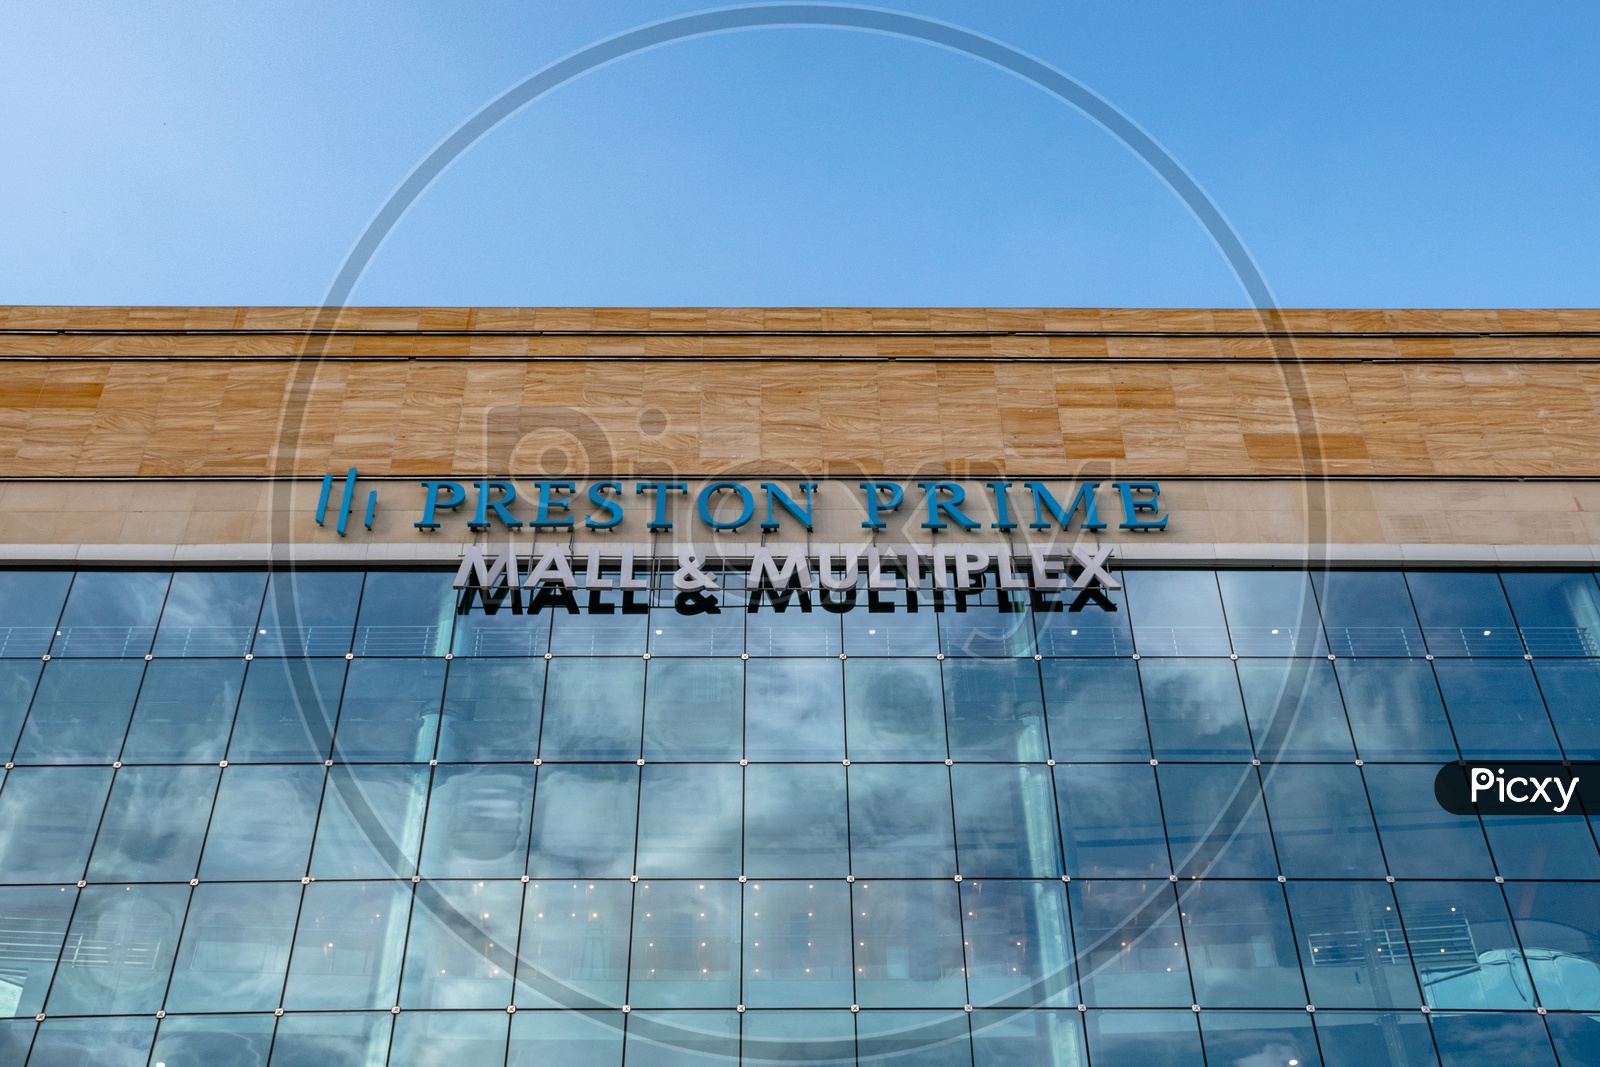 Preston Prime mall & multiplex, Gachibowli, Hyderabad.